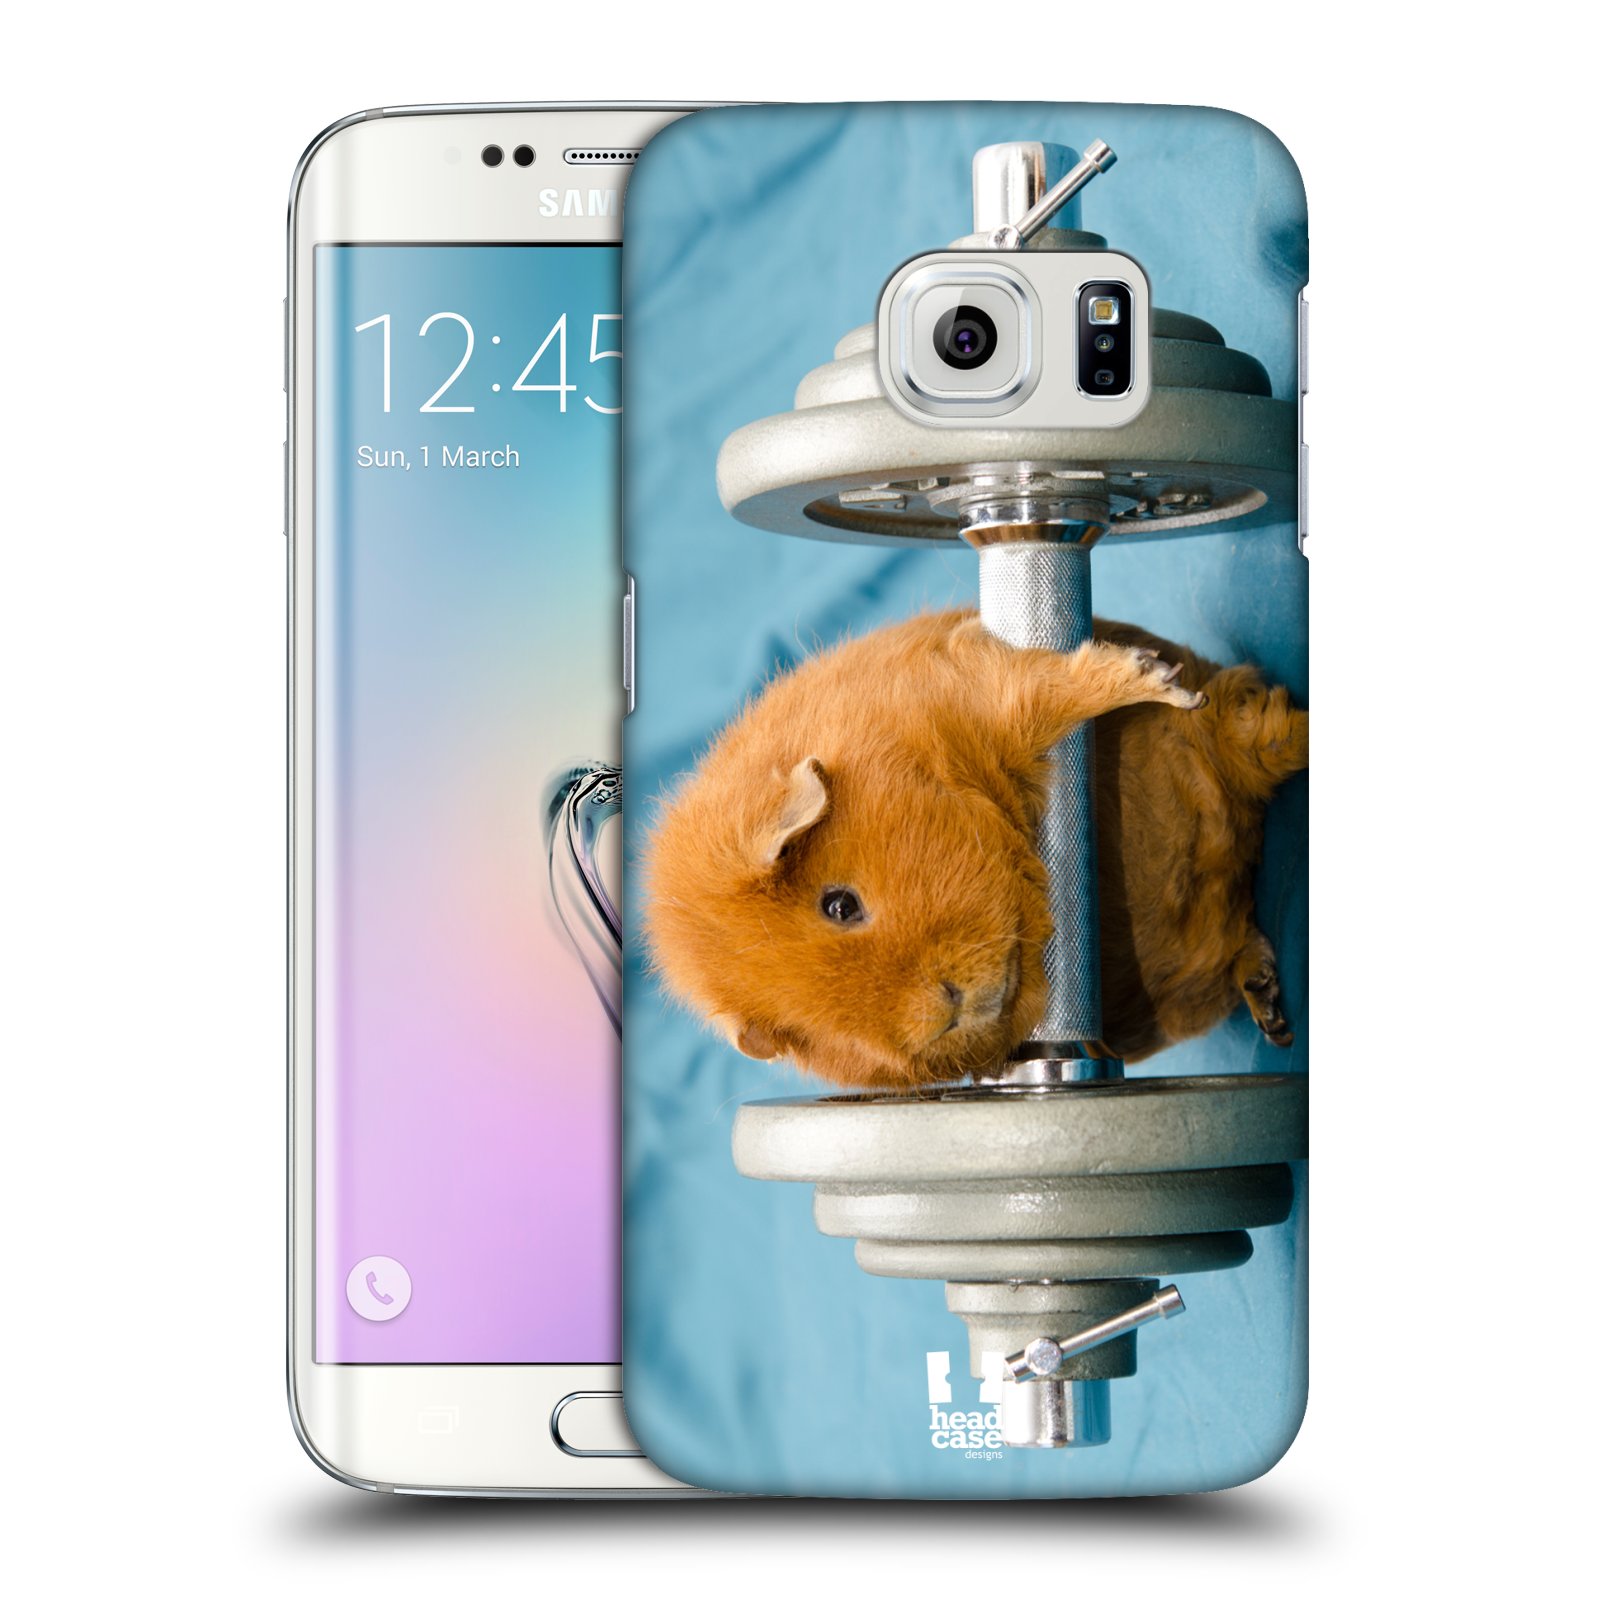 HEAD CASE plastový obal na mobil SAMSUNG Galaxy S6 EDGE (G9250, G925, G925F) vzor Legrační zvířátka křeček/morče silák